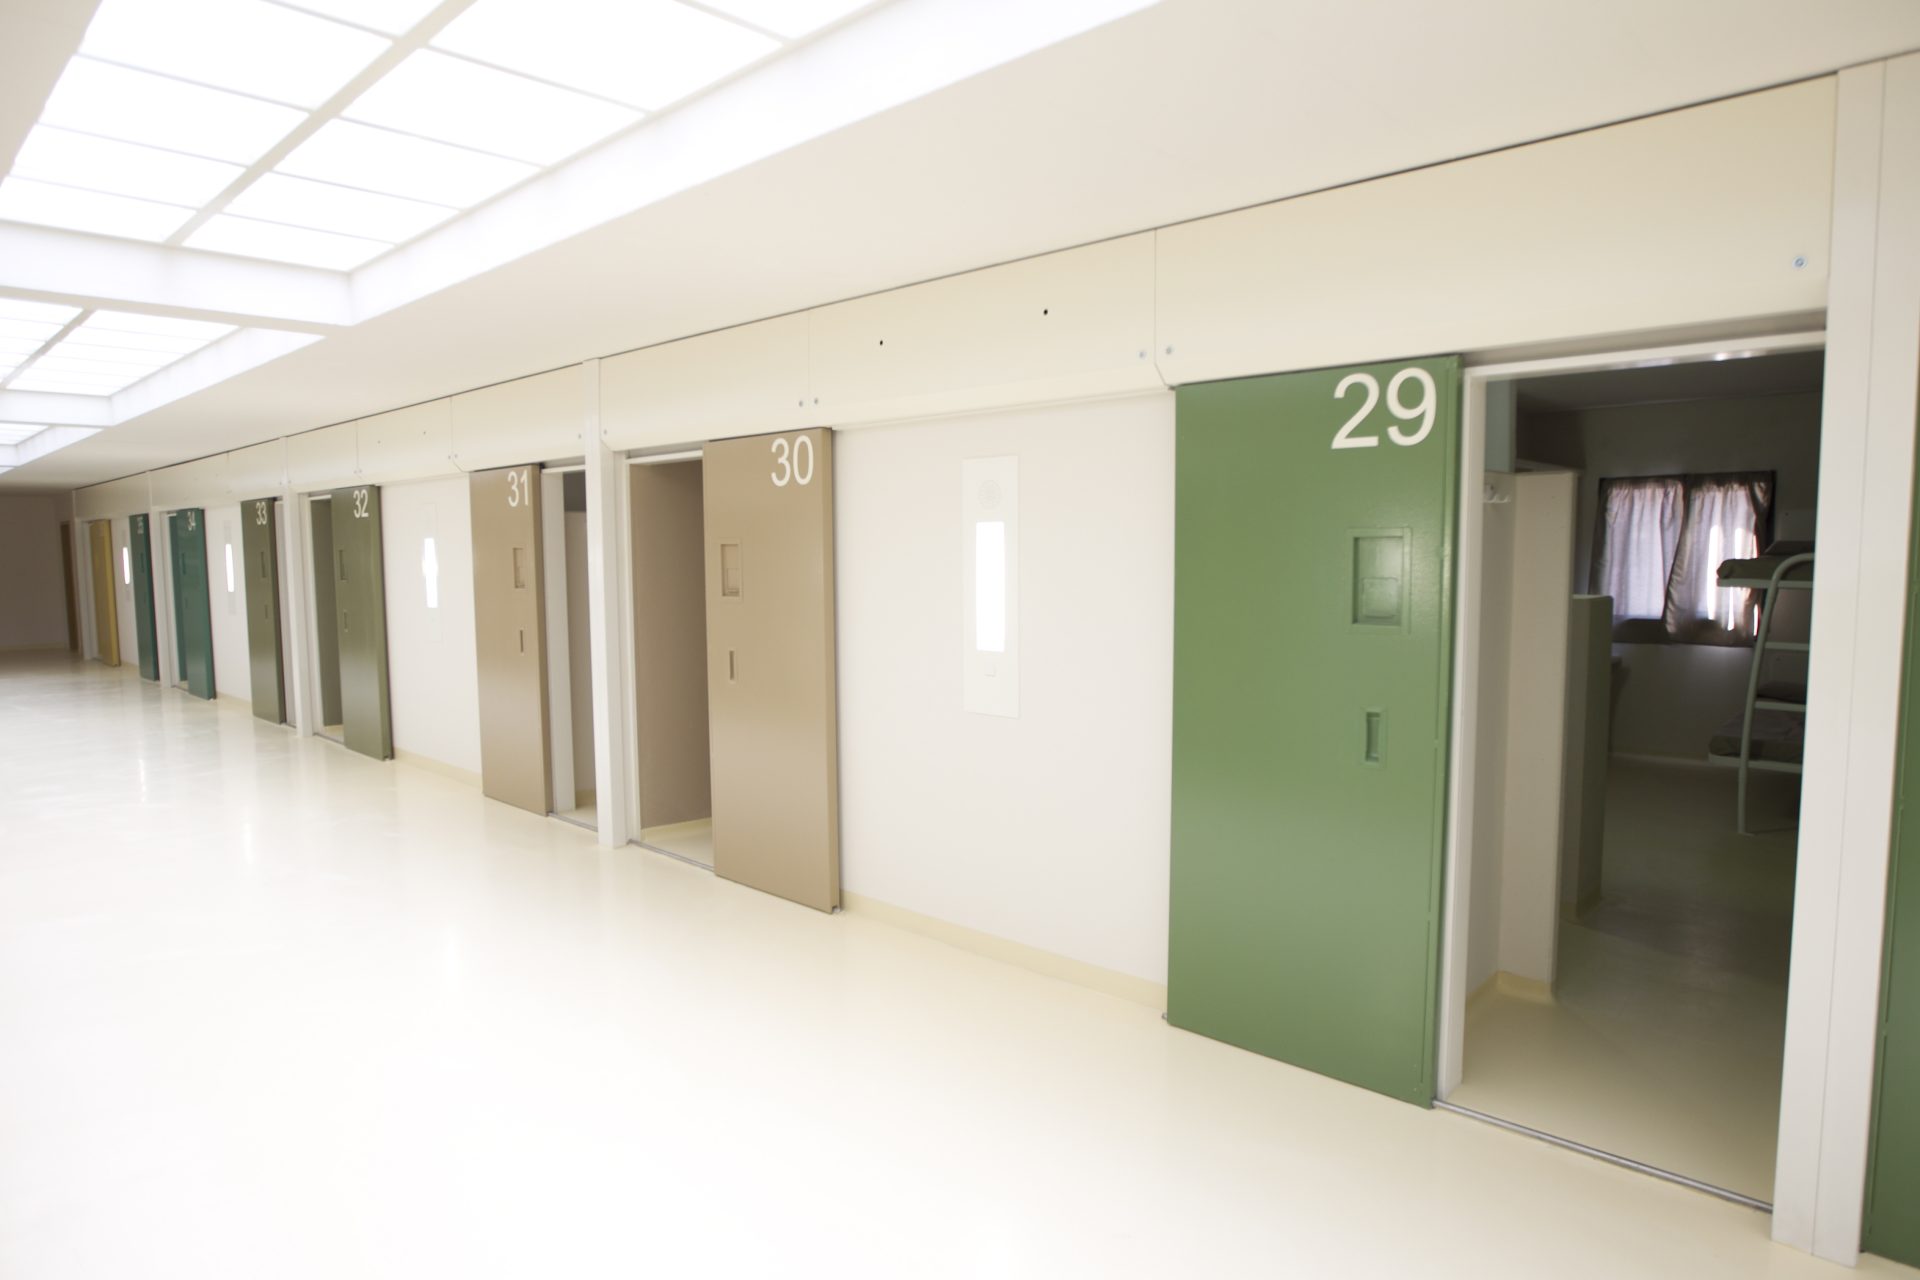 Celdas del centro penitenciario de Zaballa. EFE/David Aguilar